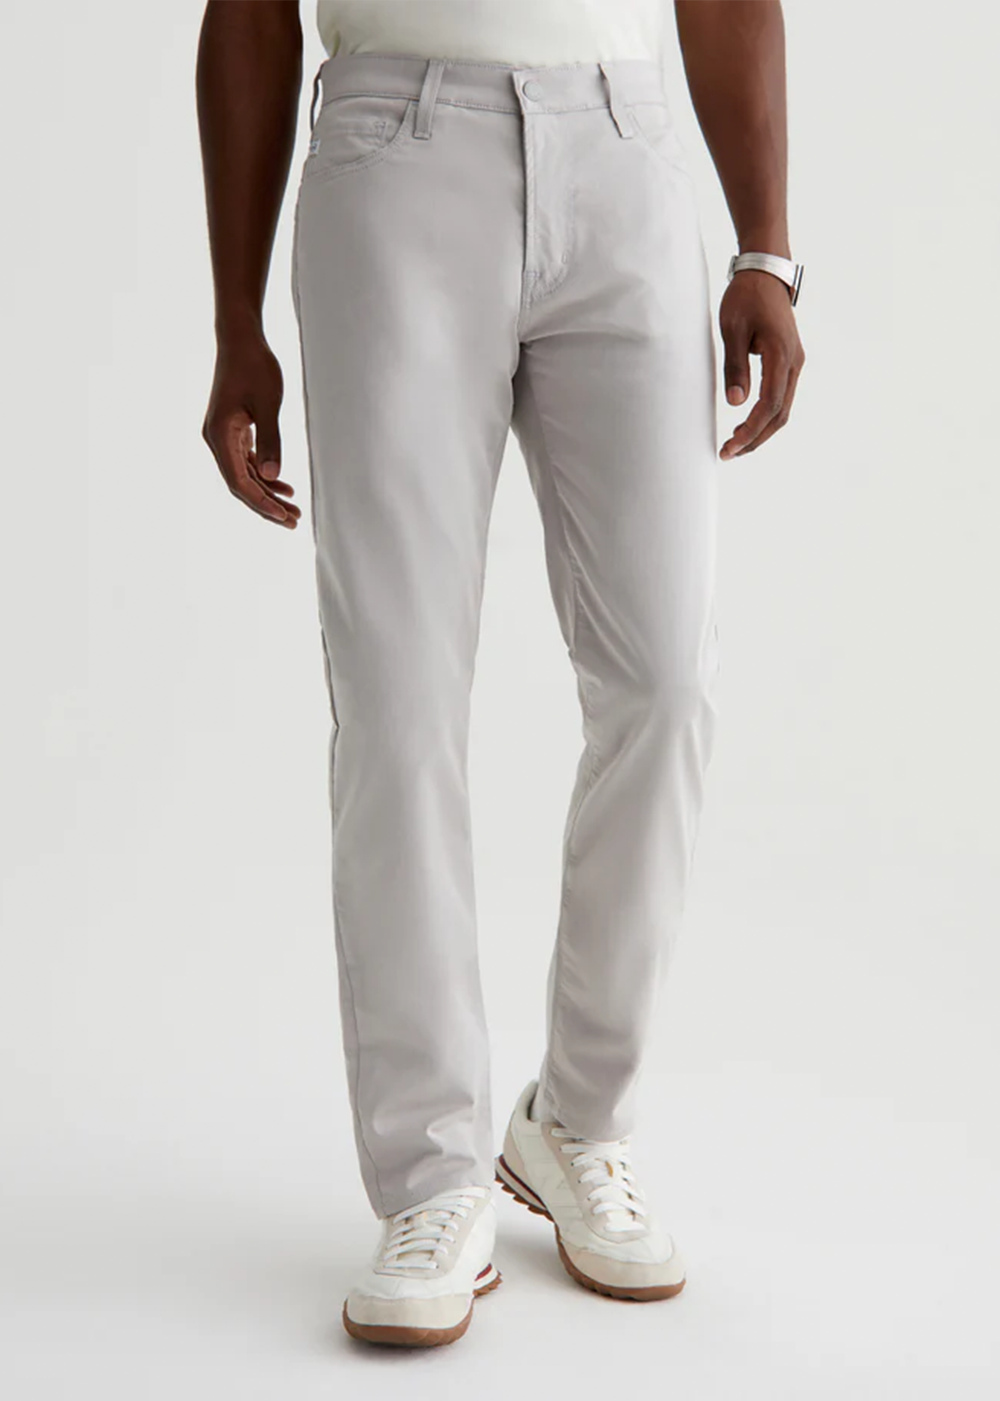 Tellis Modern Slim Pant - Mosaic Grey - AG Jeans Canada - Danali -  1783CMPMOGY